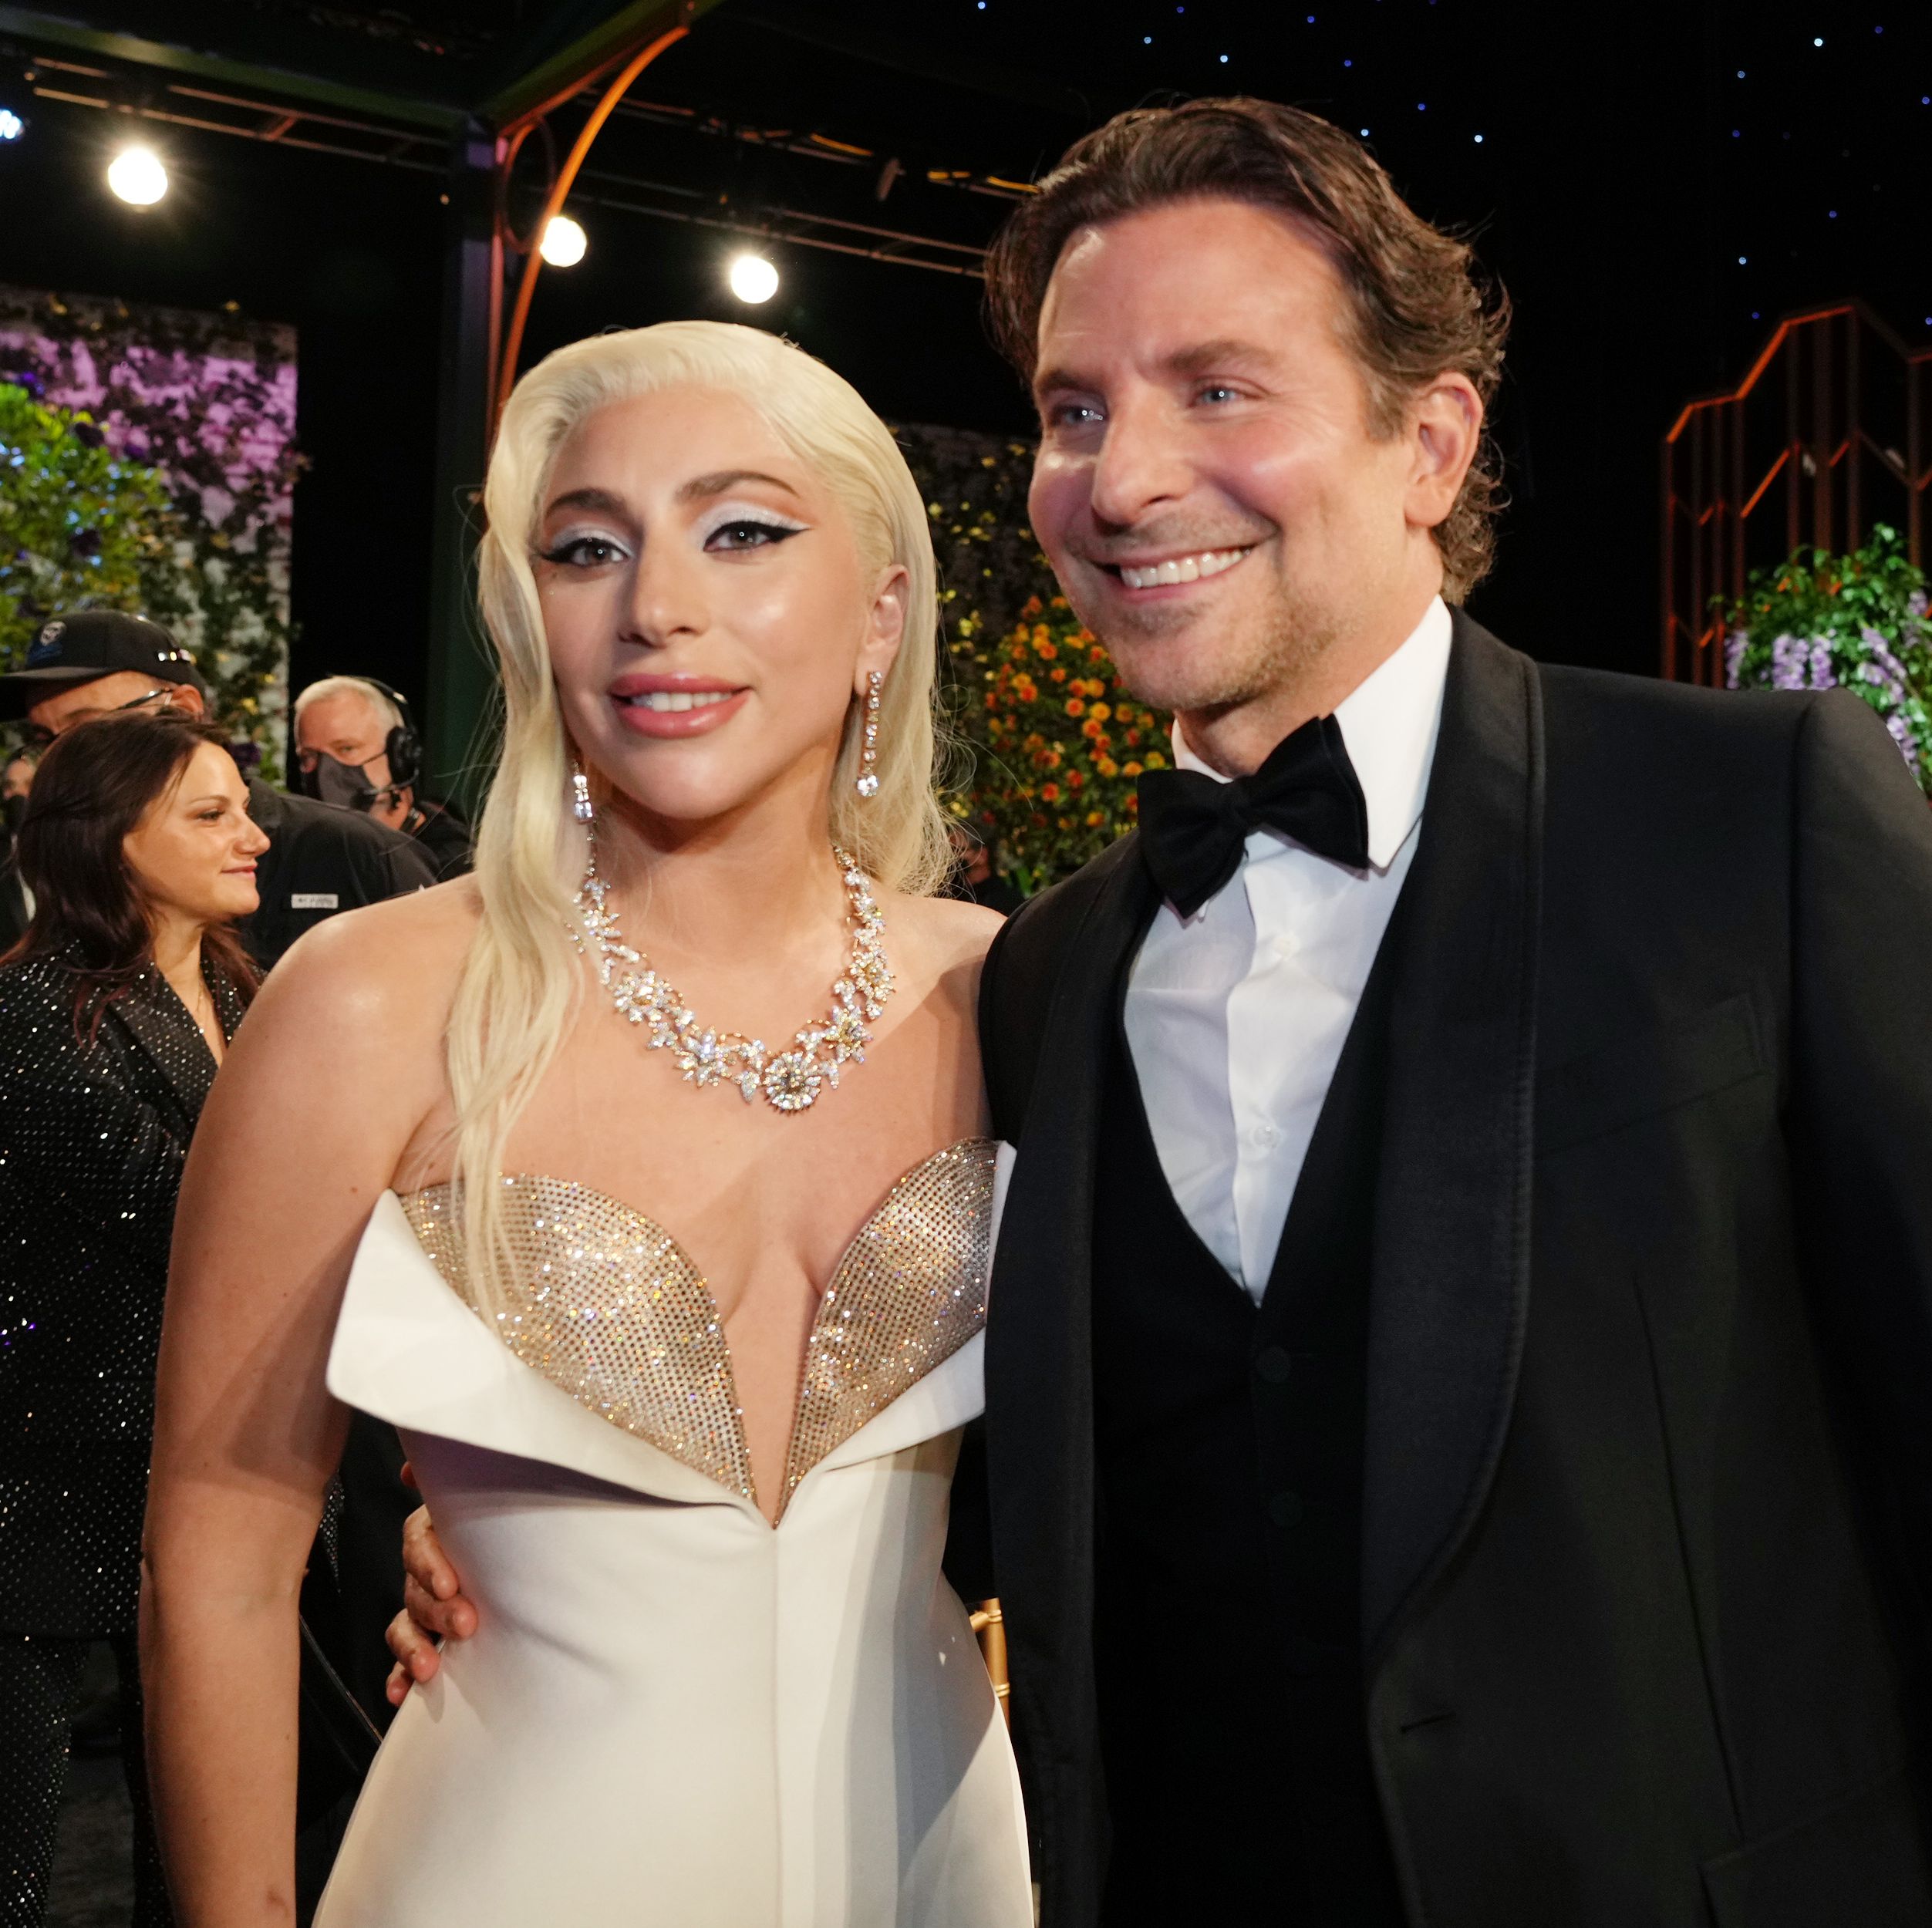 Alert: Lady Gaga and Bradley Cooper Reunited at the SAG Awards Last Night